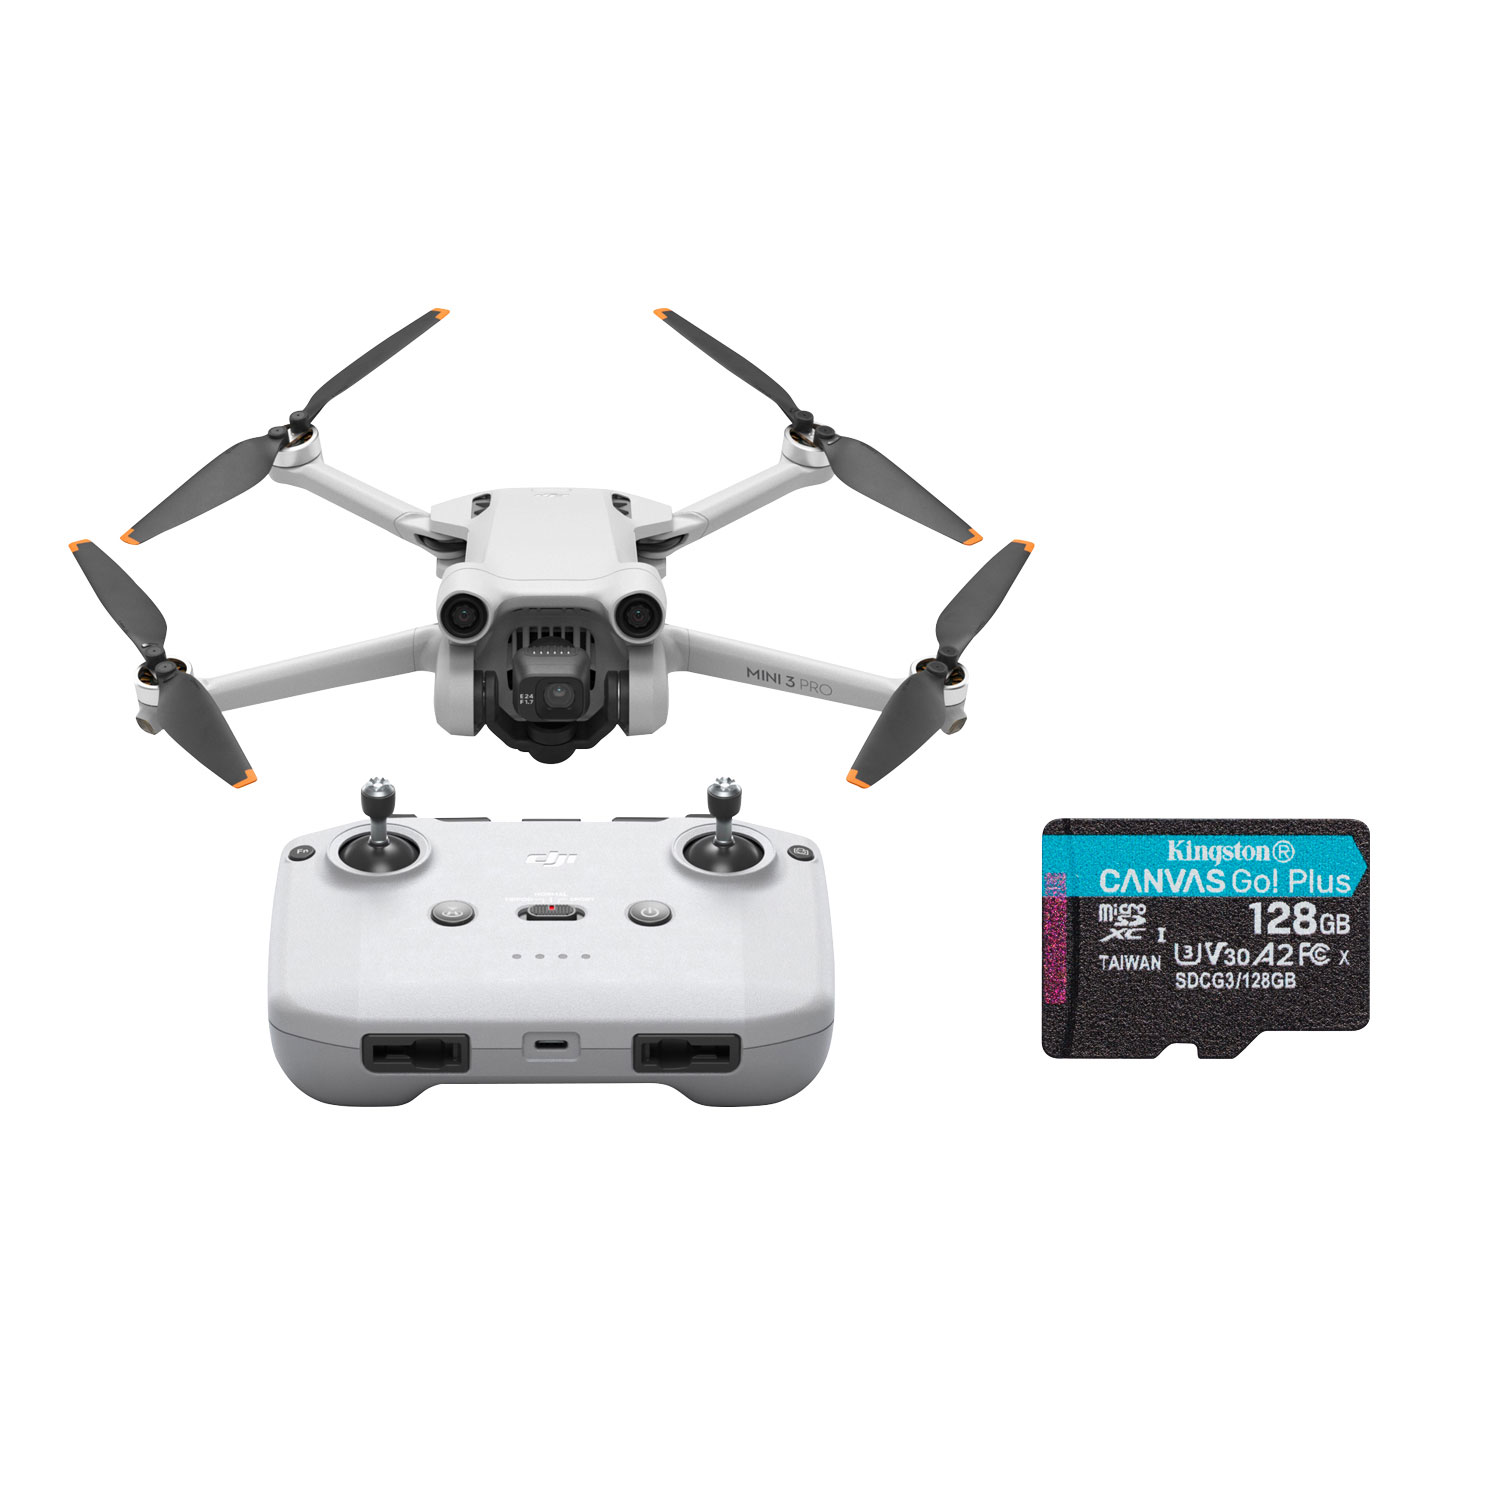 DJI Mini 3 Pro Quadcopter Drone w/ Remote Control & 128GB 170MB/s microSDXC Memory Card - Grey